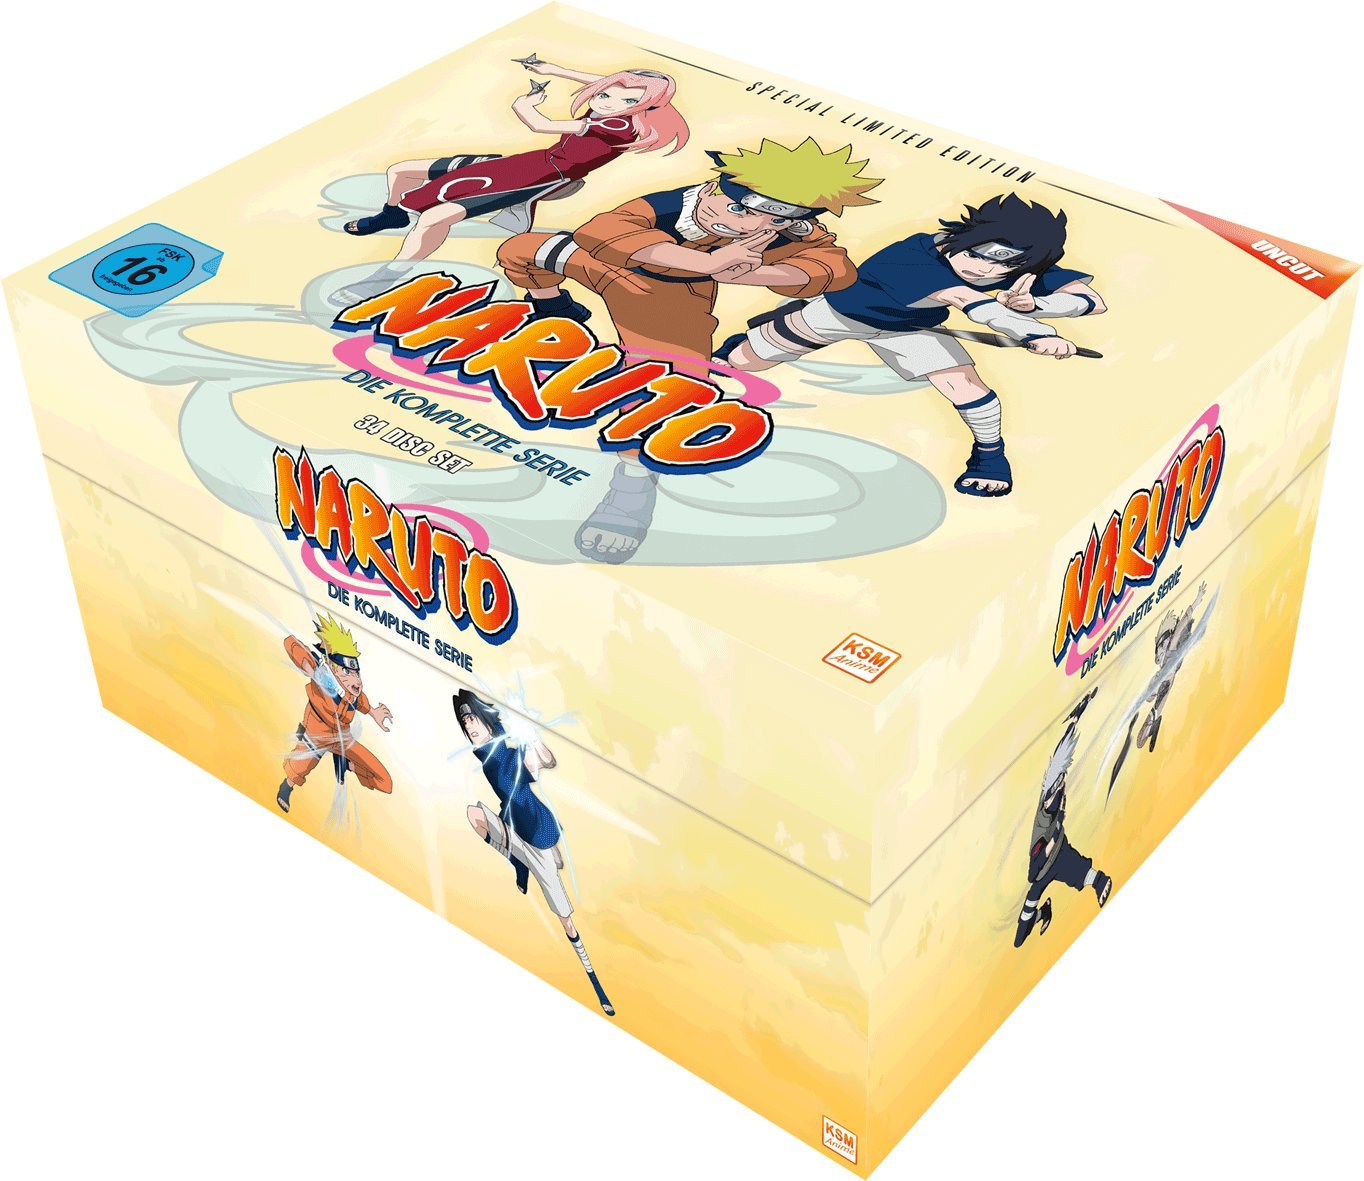 Naruto Box: Special Limited Edition: Staffel 1-9 + 8 Postkarten + Poster